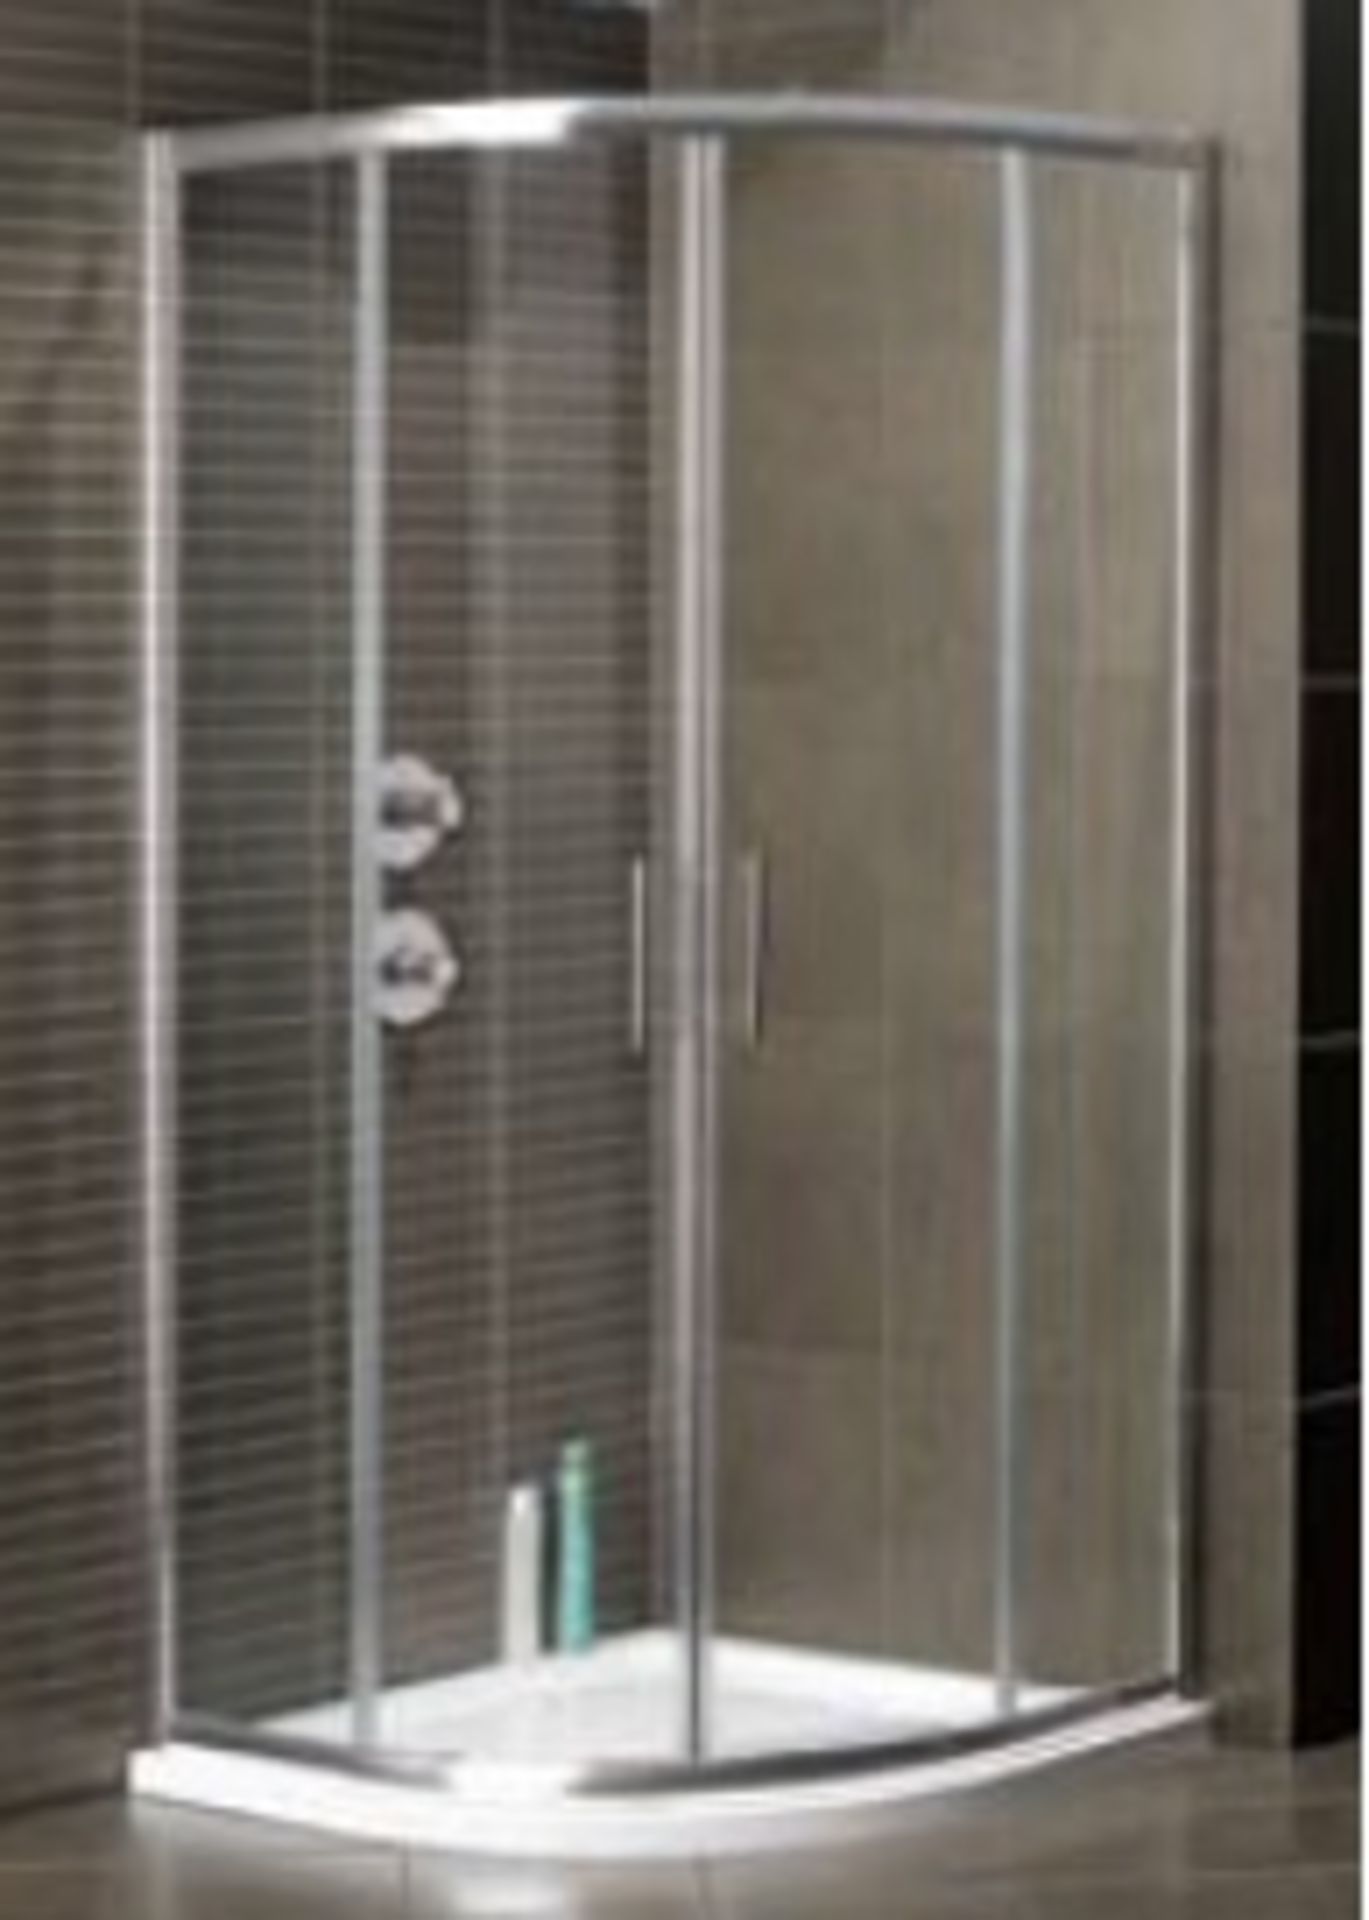 5 x Vogue SULIS Quadrant 900mm Shower Enclosures - Polished Chrome Finish - 6mm Clear Glass - T